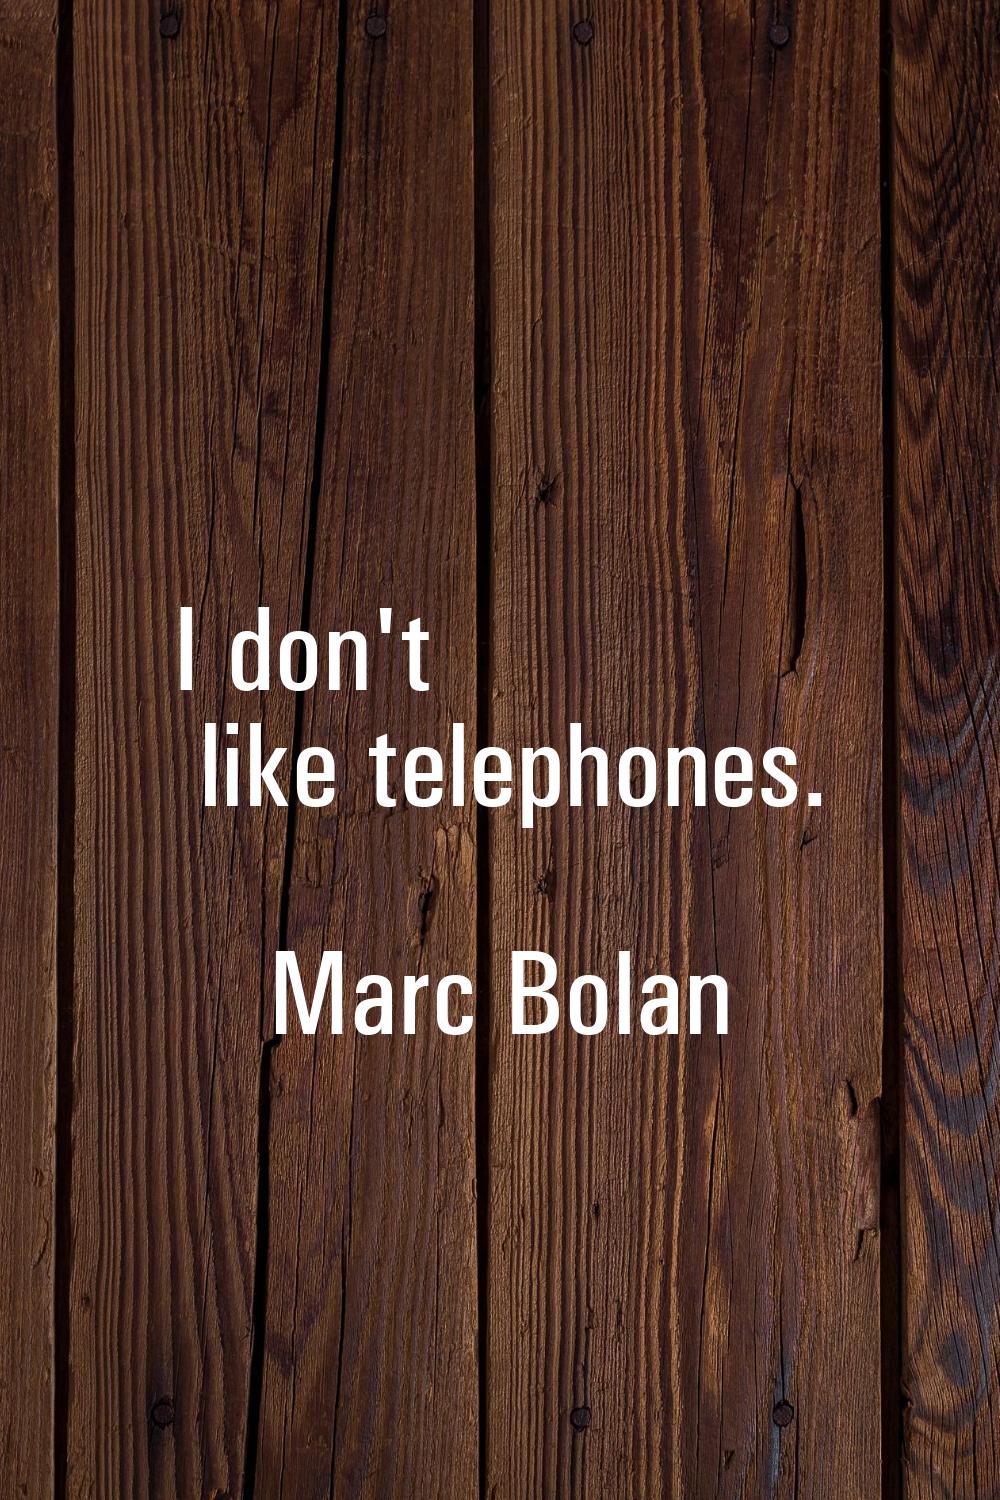 I don't like telephones.